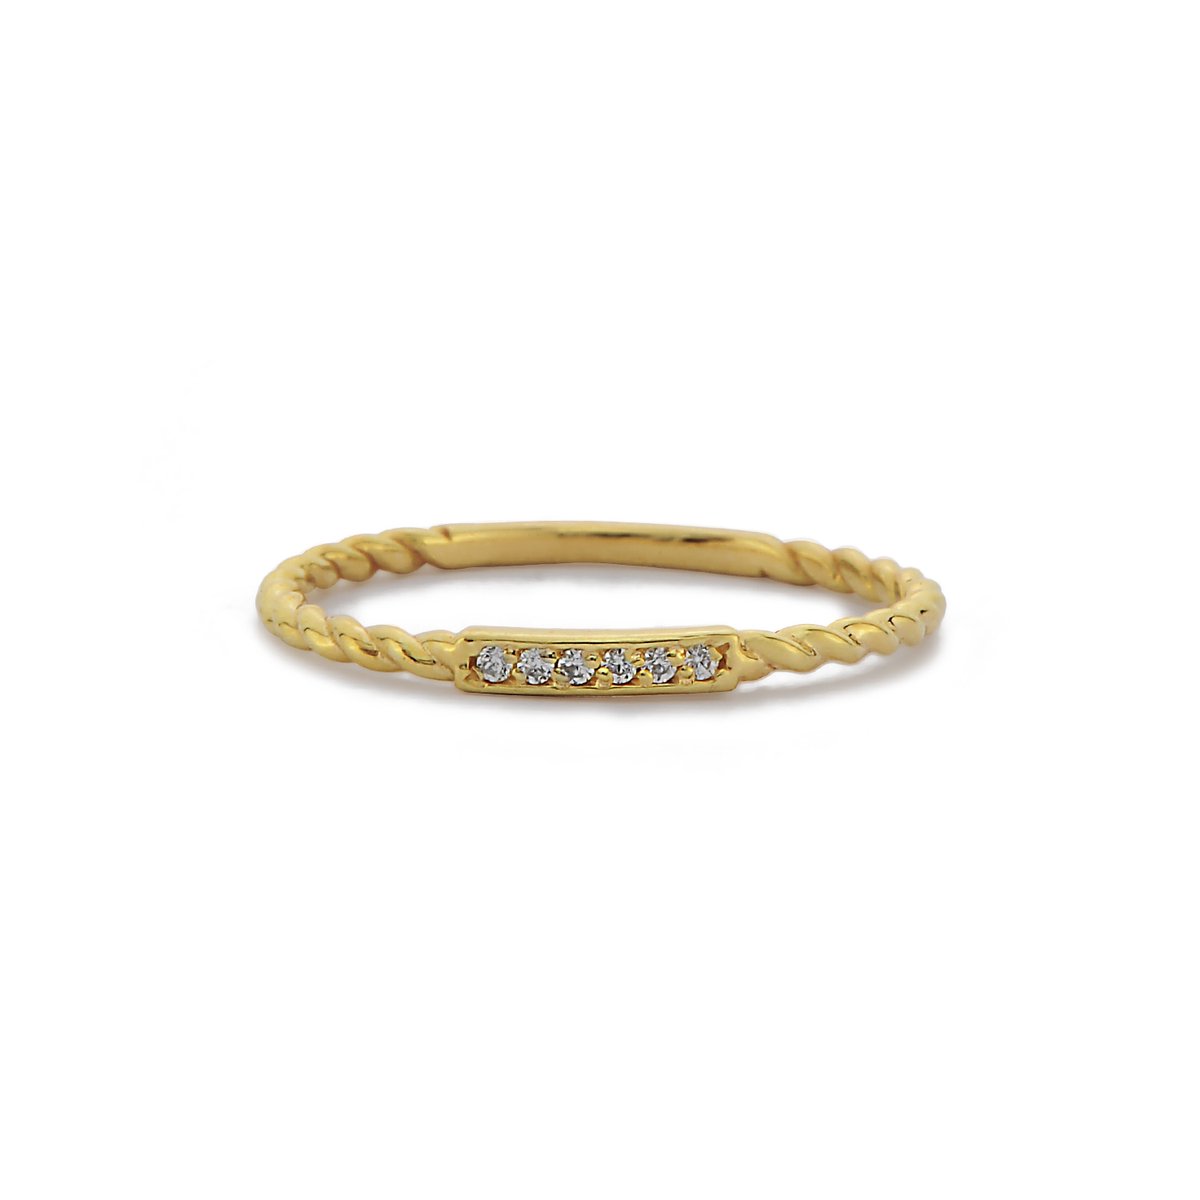 2bs jewelry dames ring, diamanten ring, gouden ring, Valentijns cadeau, 14k goud, SI